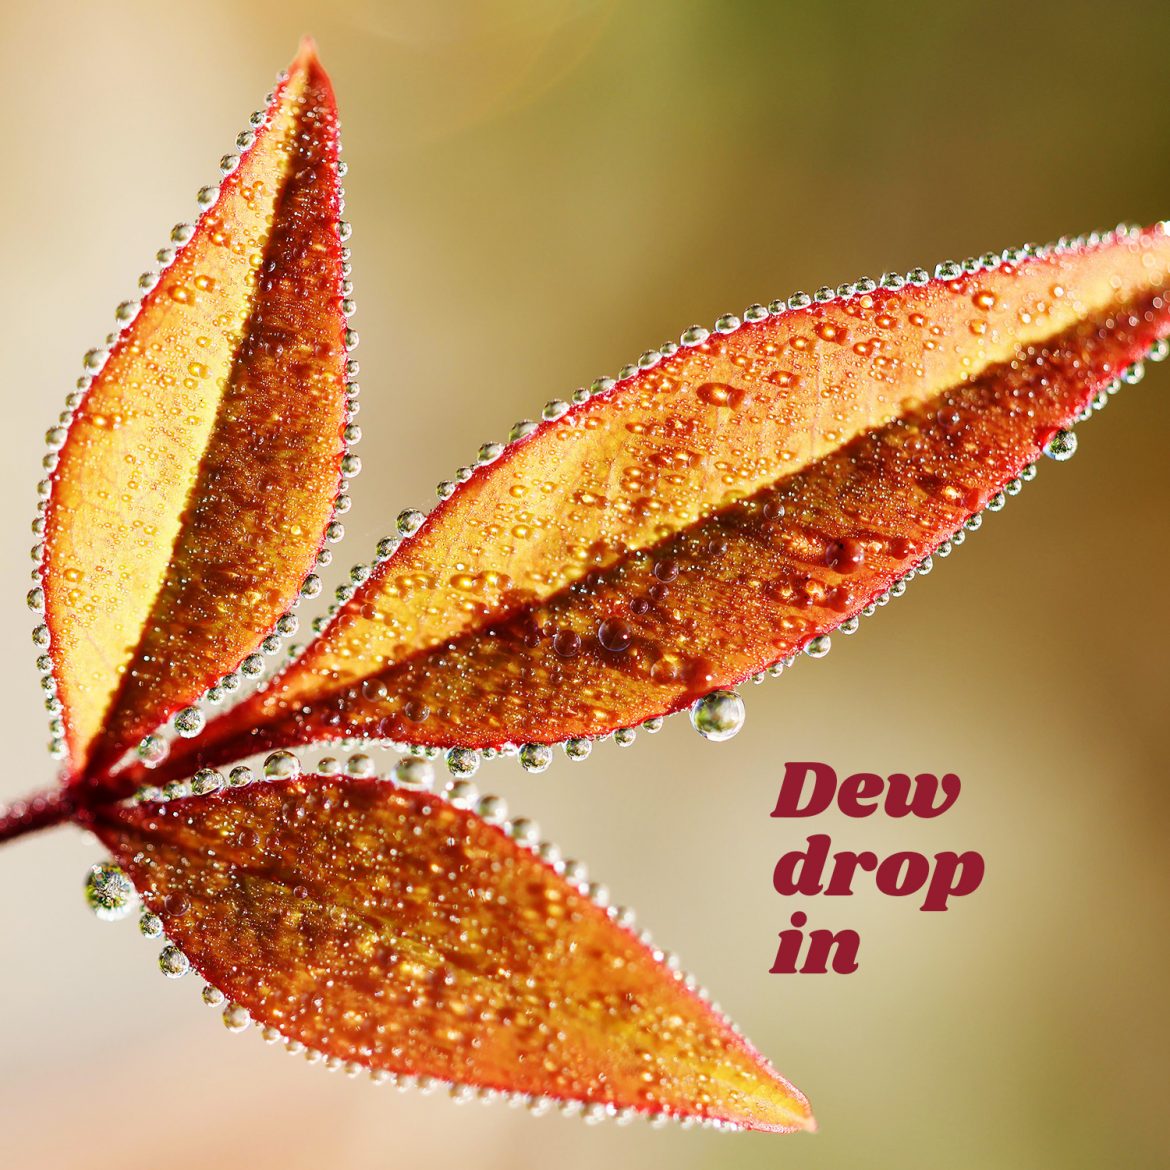 Dew drop in